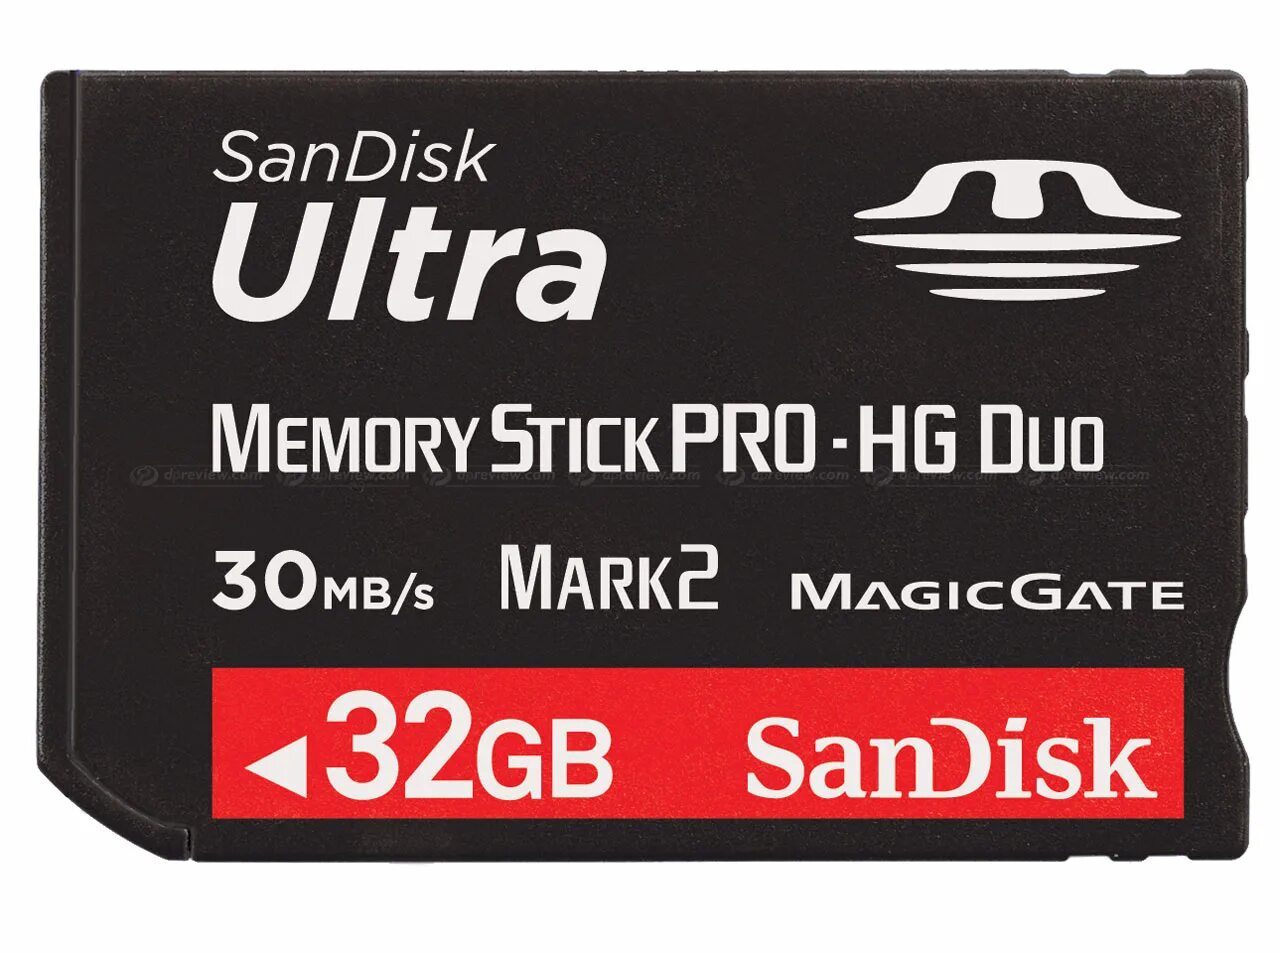 16 гб памяти цена. Карта памяти SANDISK Memory Stick Pro Duo 8gb. Карта памяти SANDISK Ultra Memory Stick Pro-HG Duo 4gb. Карта памяти SANDISK 4gb MEMORYSTICK Pro. Карта памяти Silicon Power Memory Stick Pro Duo 4gb.